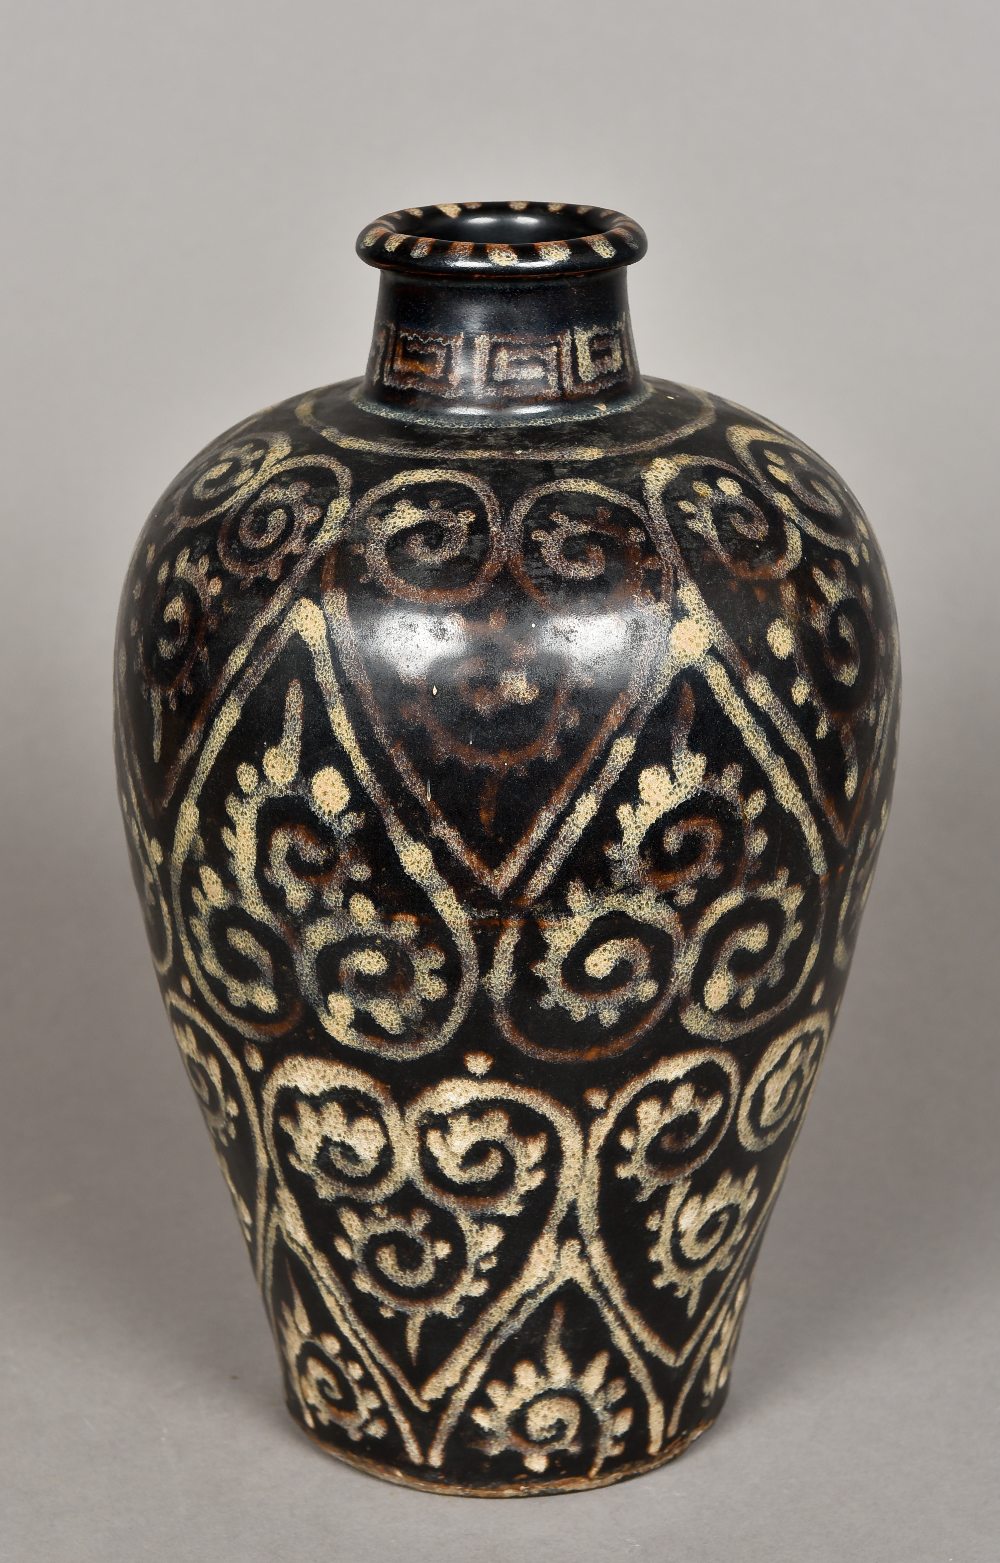 A Chinese Jizhou Guri style vase Decorated with ruyi scrolls on a dark black/brown ground,